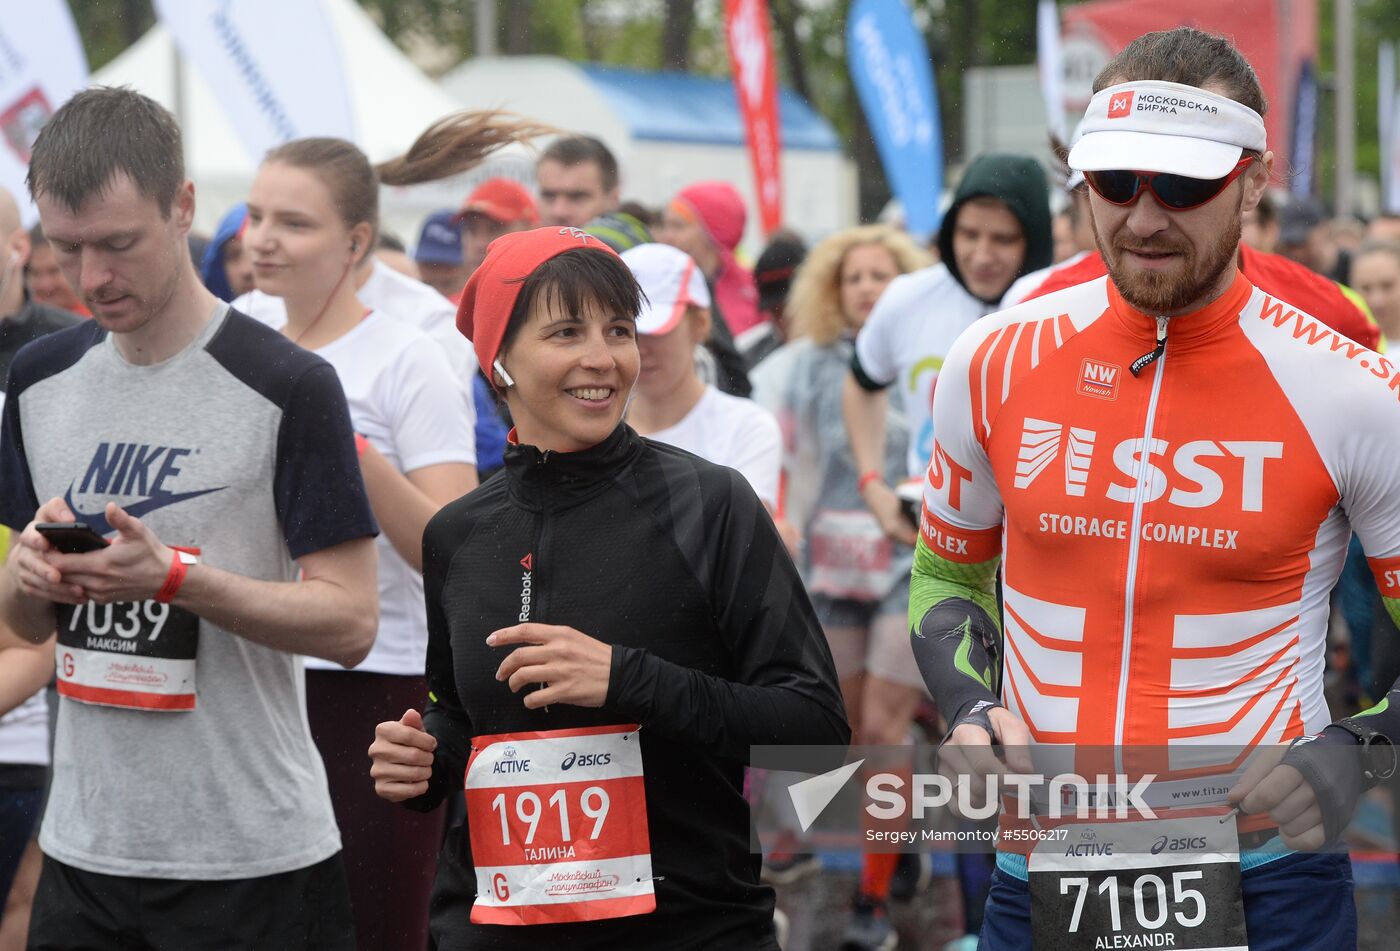 Moscow Half Marathon 2018